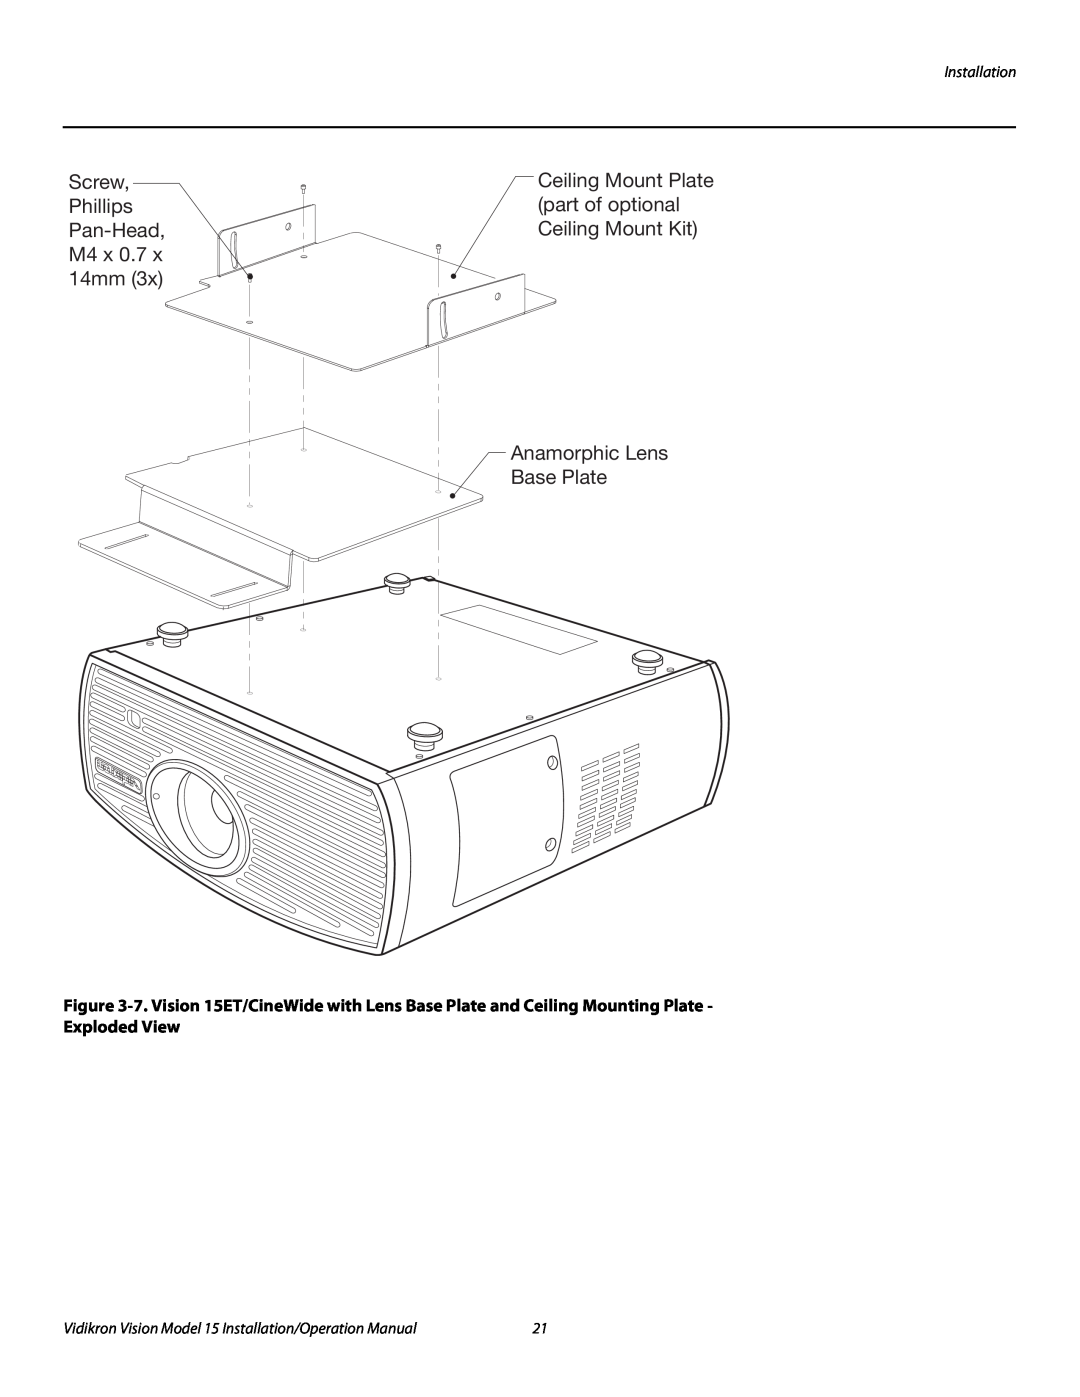 Vidikron Vision 15ET/CineWideTM Screw Phillips Pan-Head, M4 x 0.7 x 14mm, Anamorphic Lens Base Plate, Installation 